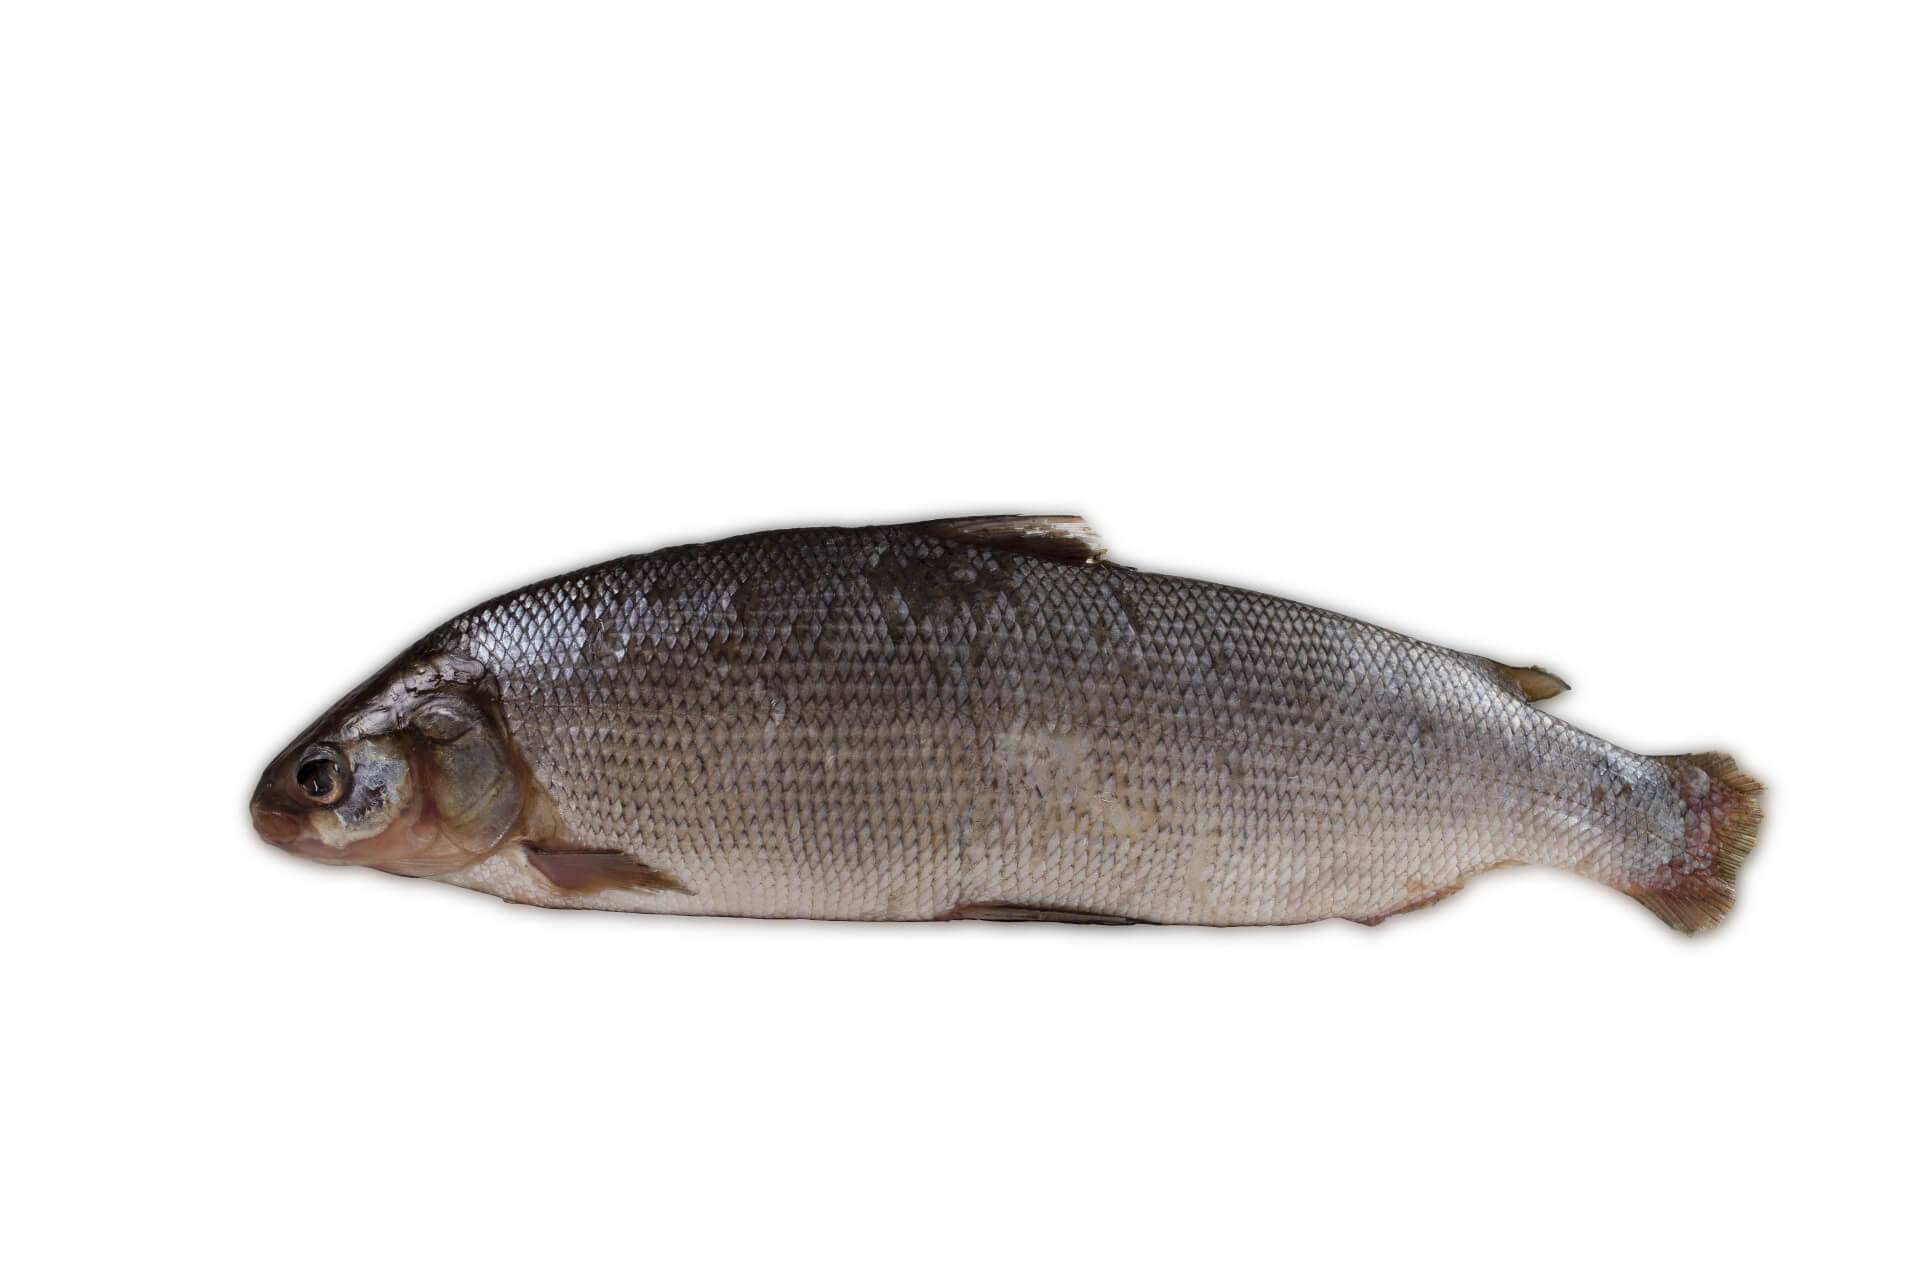 Рыба «Пелядь» фото и описание